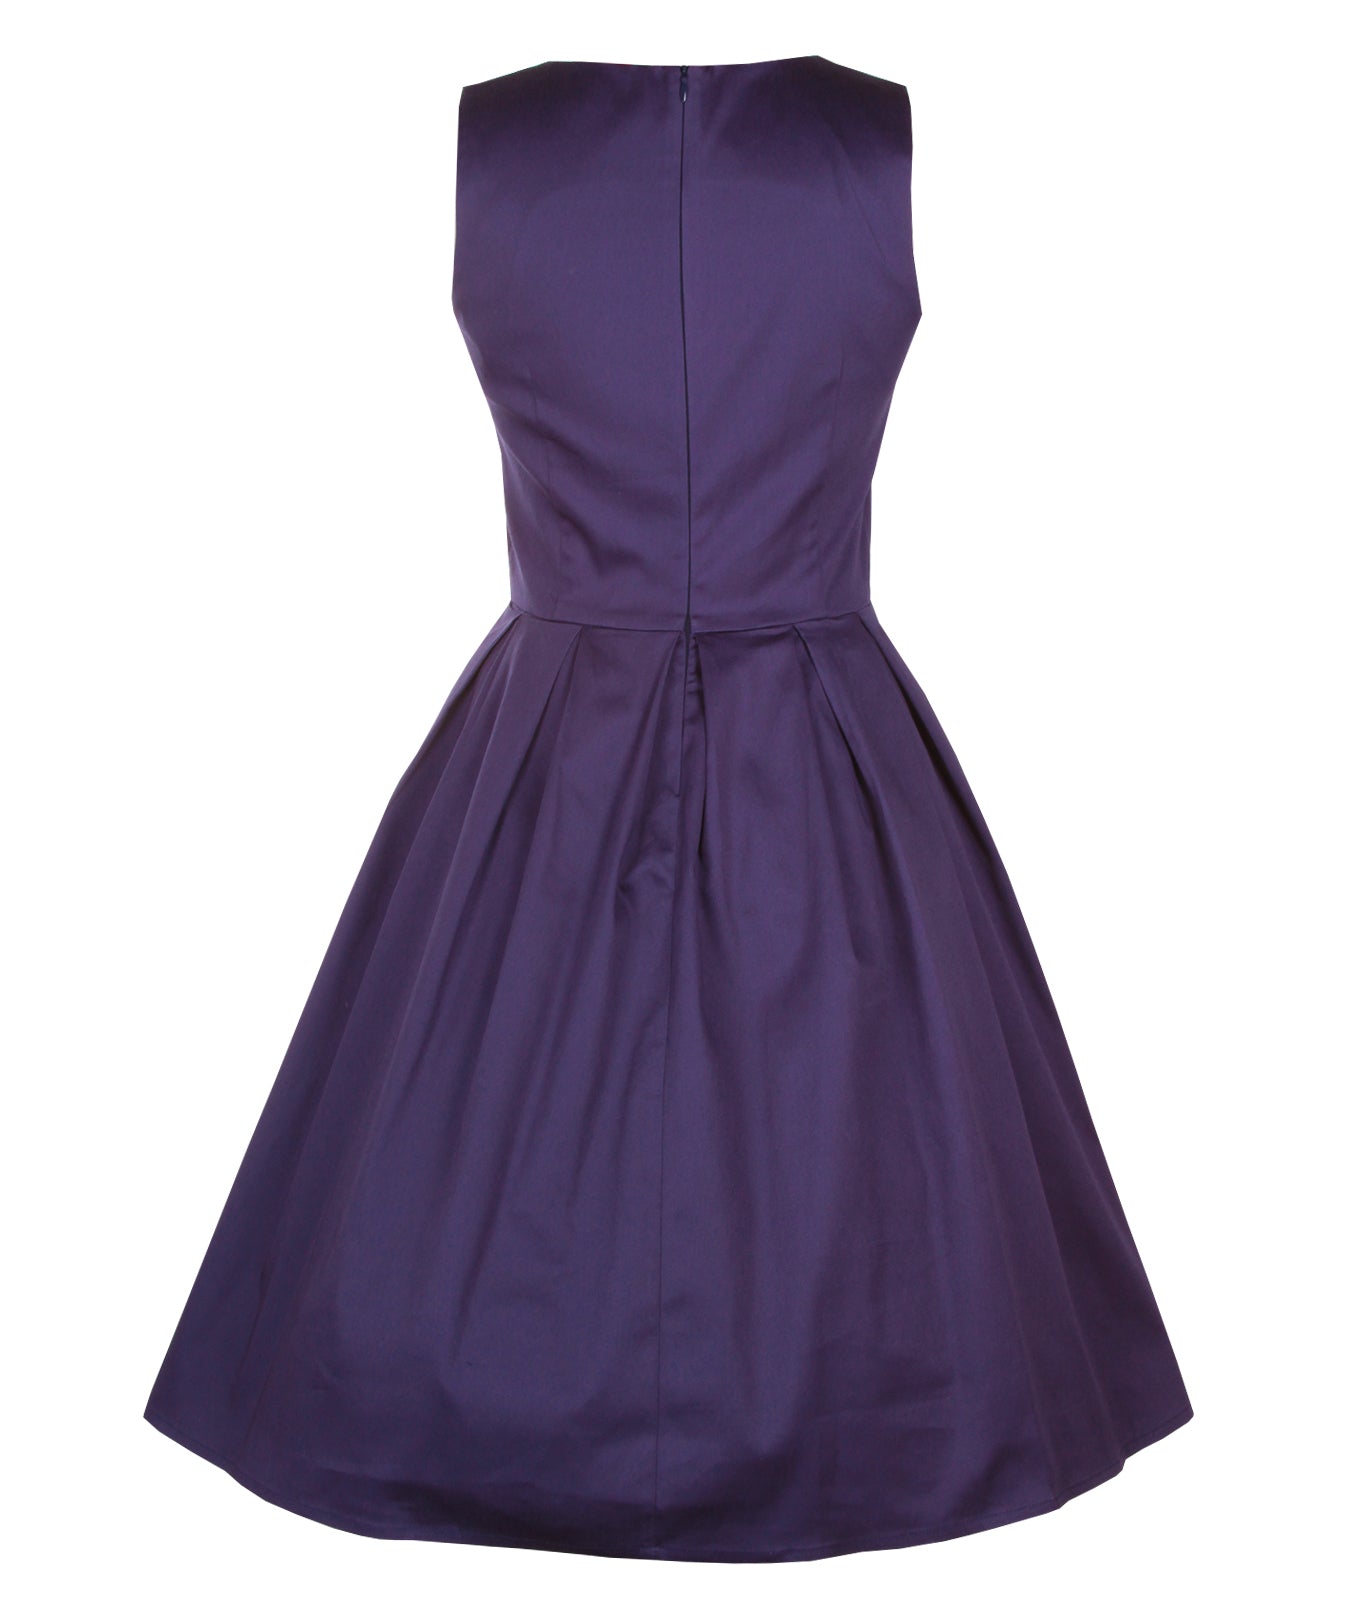 Stylish 50's Retro Swing Dress With Pockets in Plain Blue